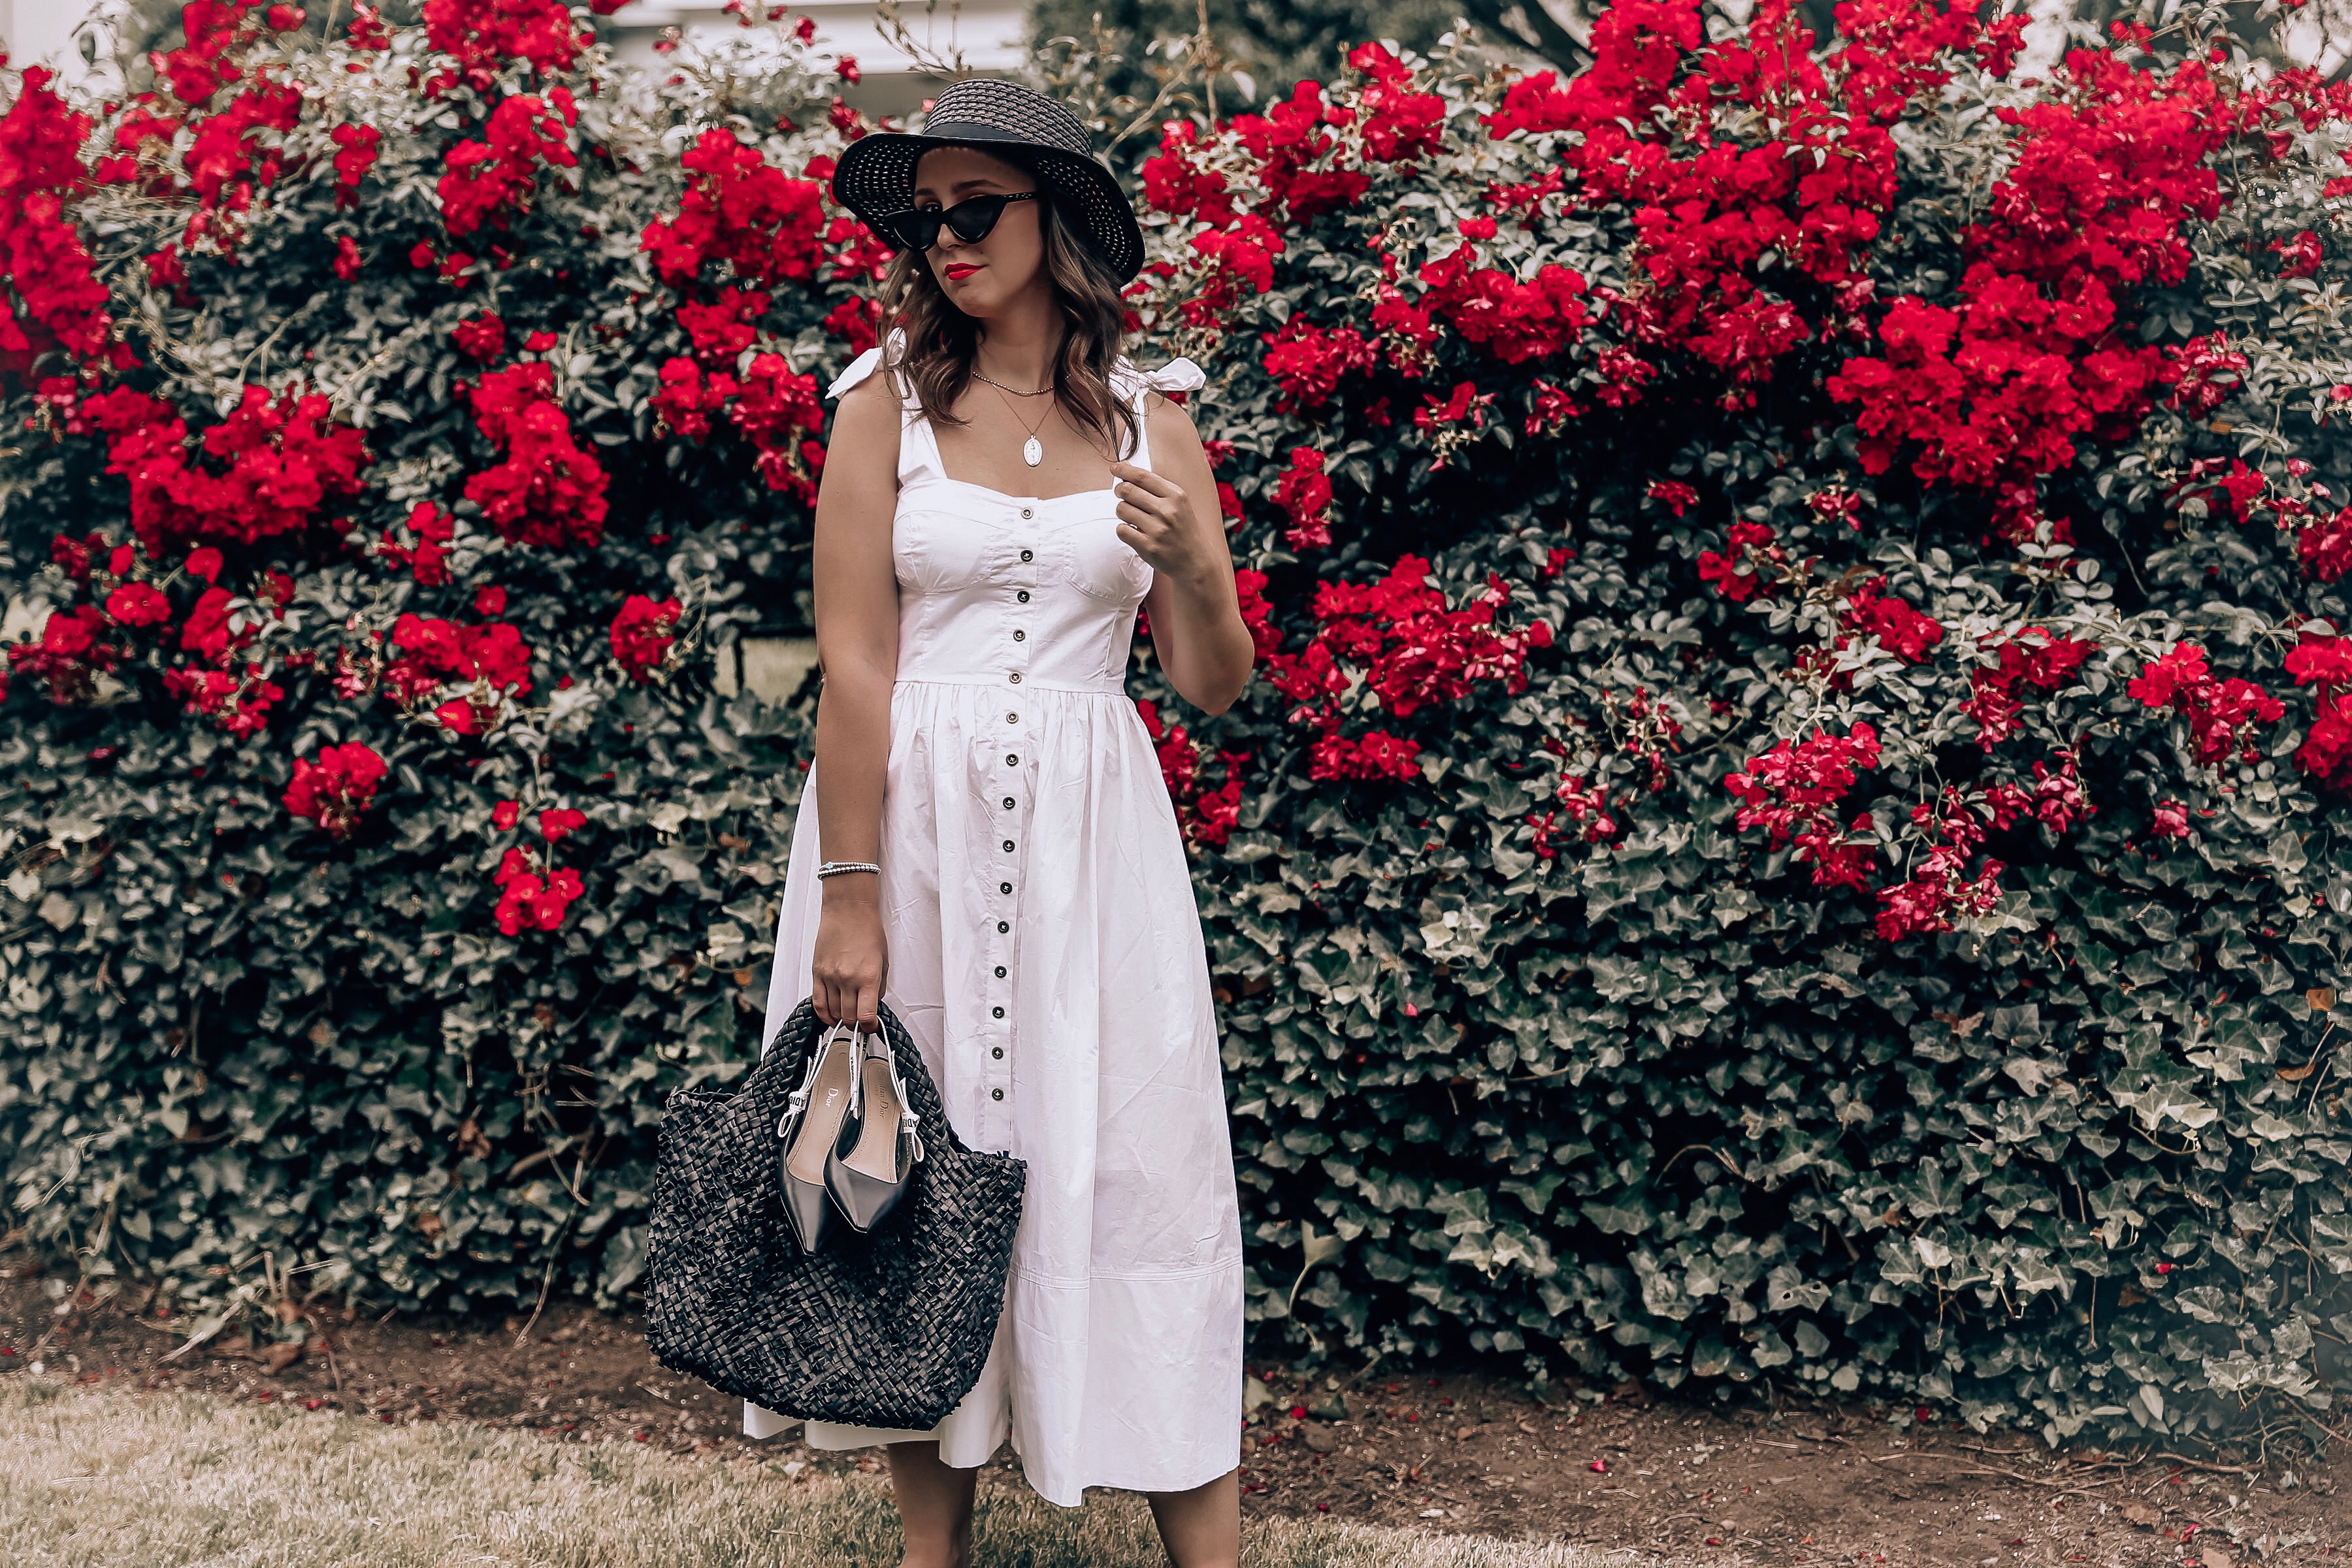 dior sling backs-little white dress-style-outfit-blogger-etienne aigner-bag